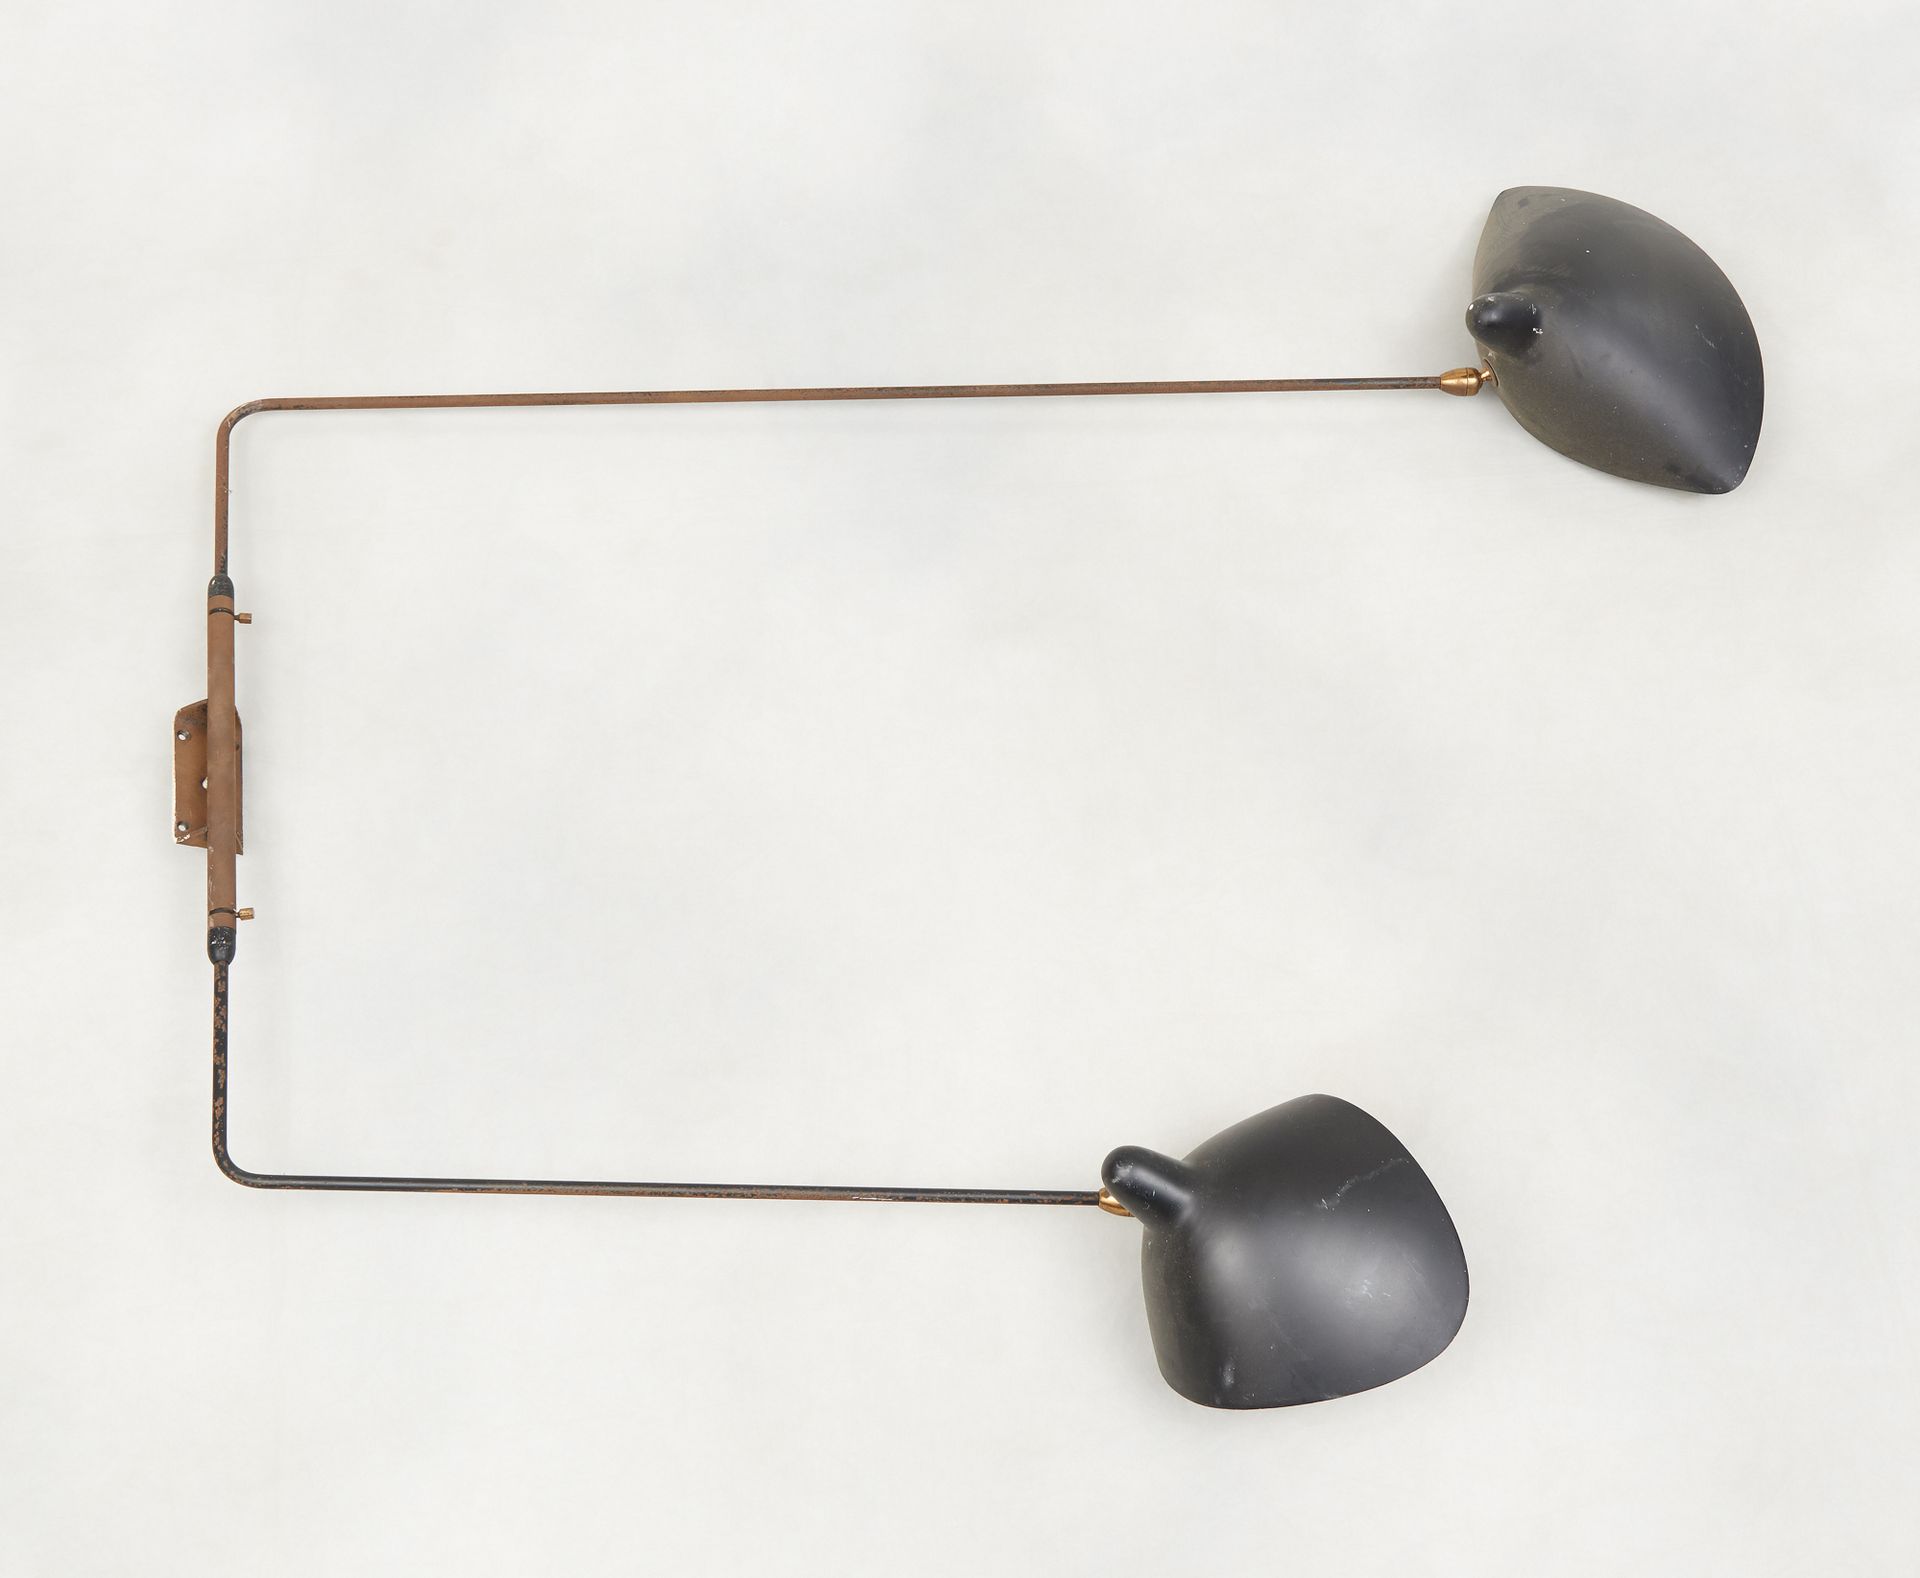 Design Serge Mouille. 灯具：双臂壁灯（1954年），漆面钢。

尺寸：宽124和86，深70厘米。

见图片。